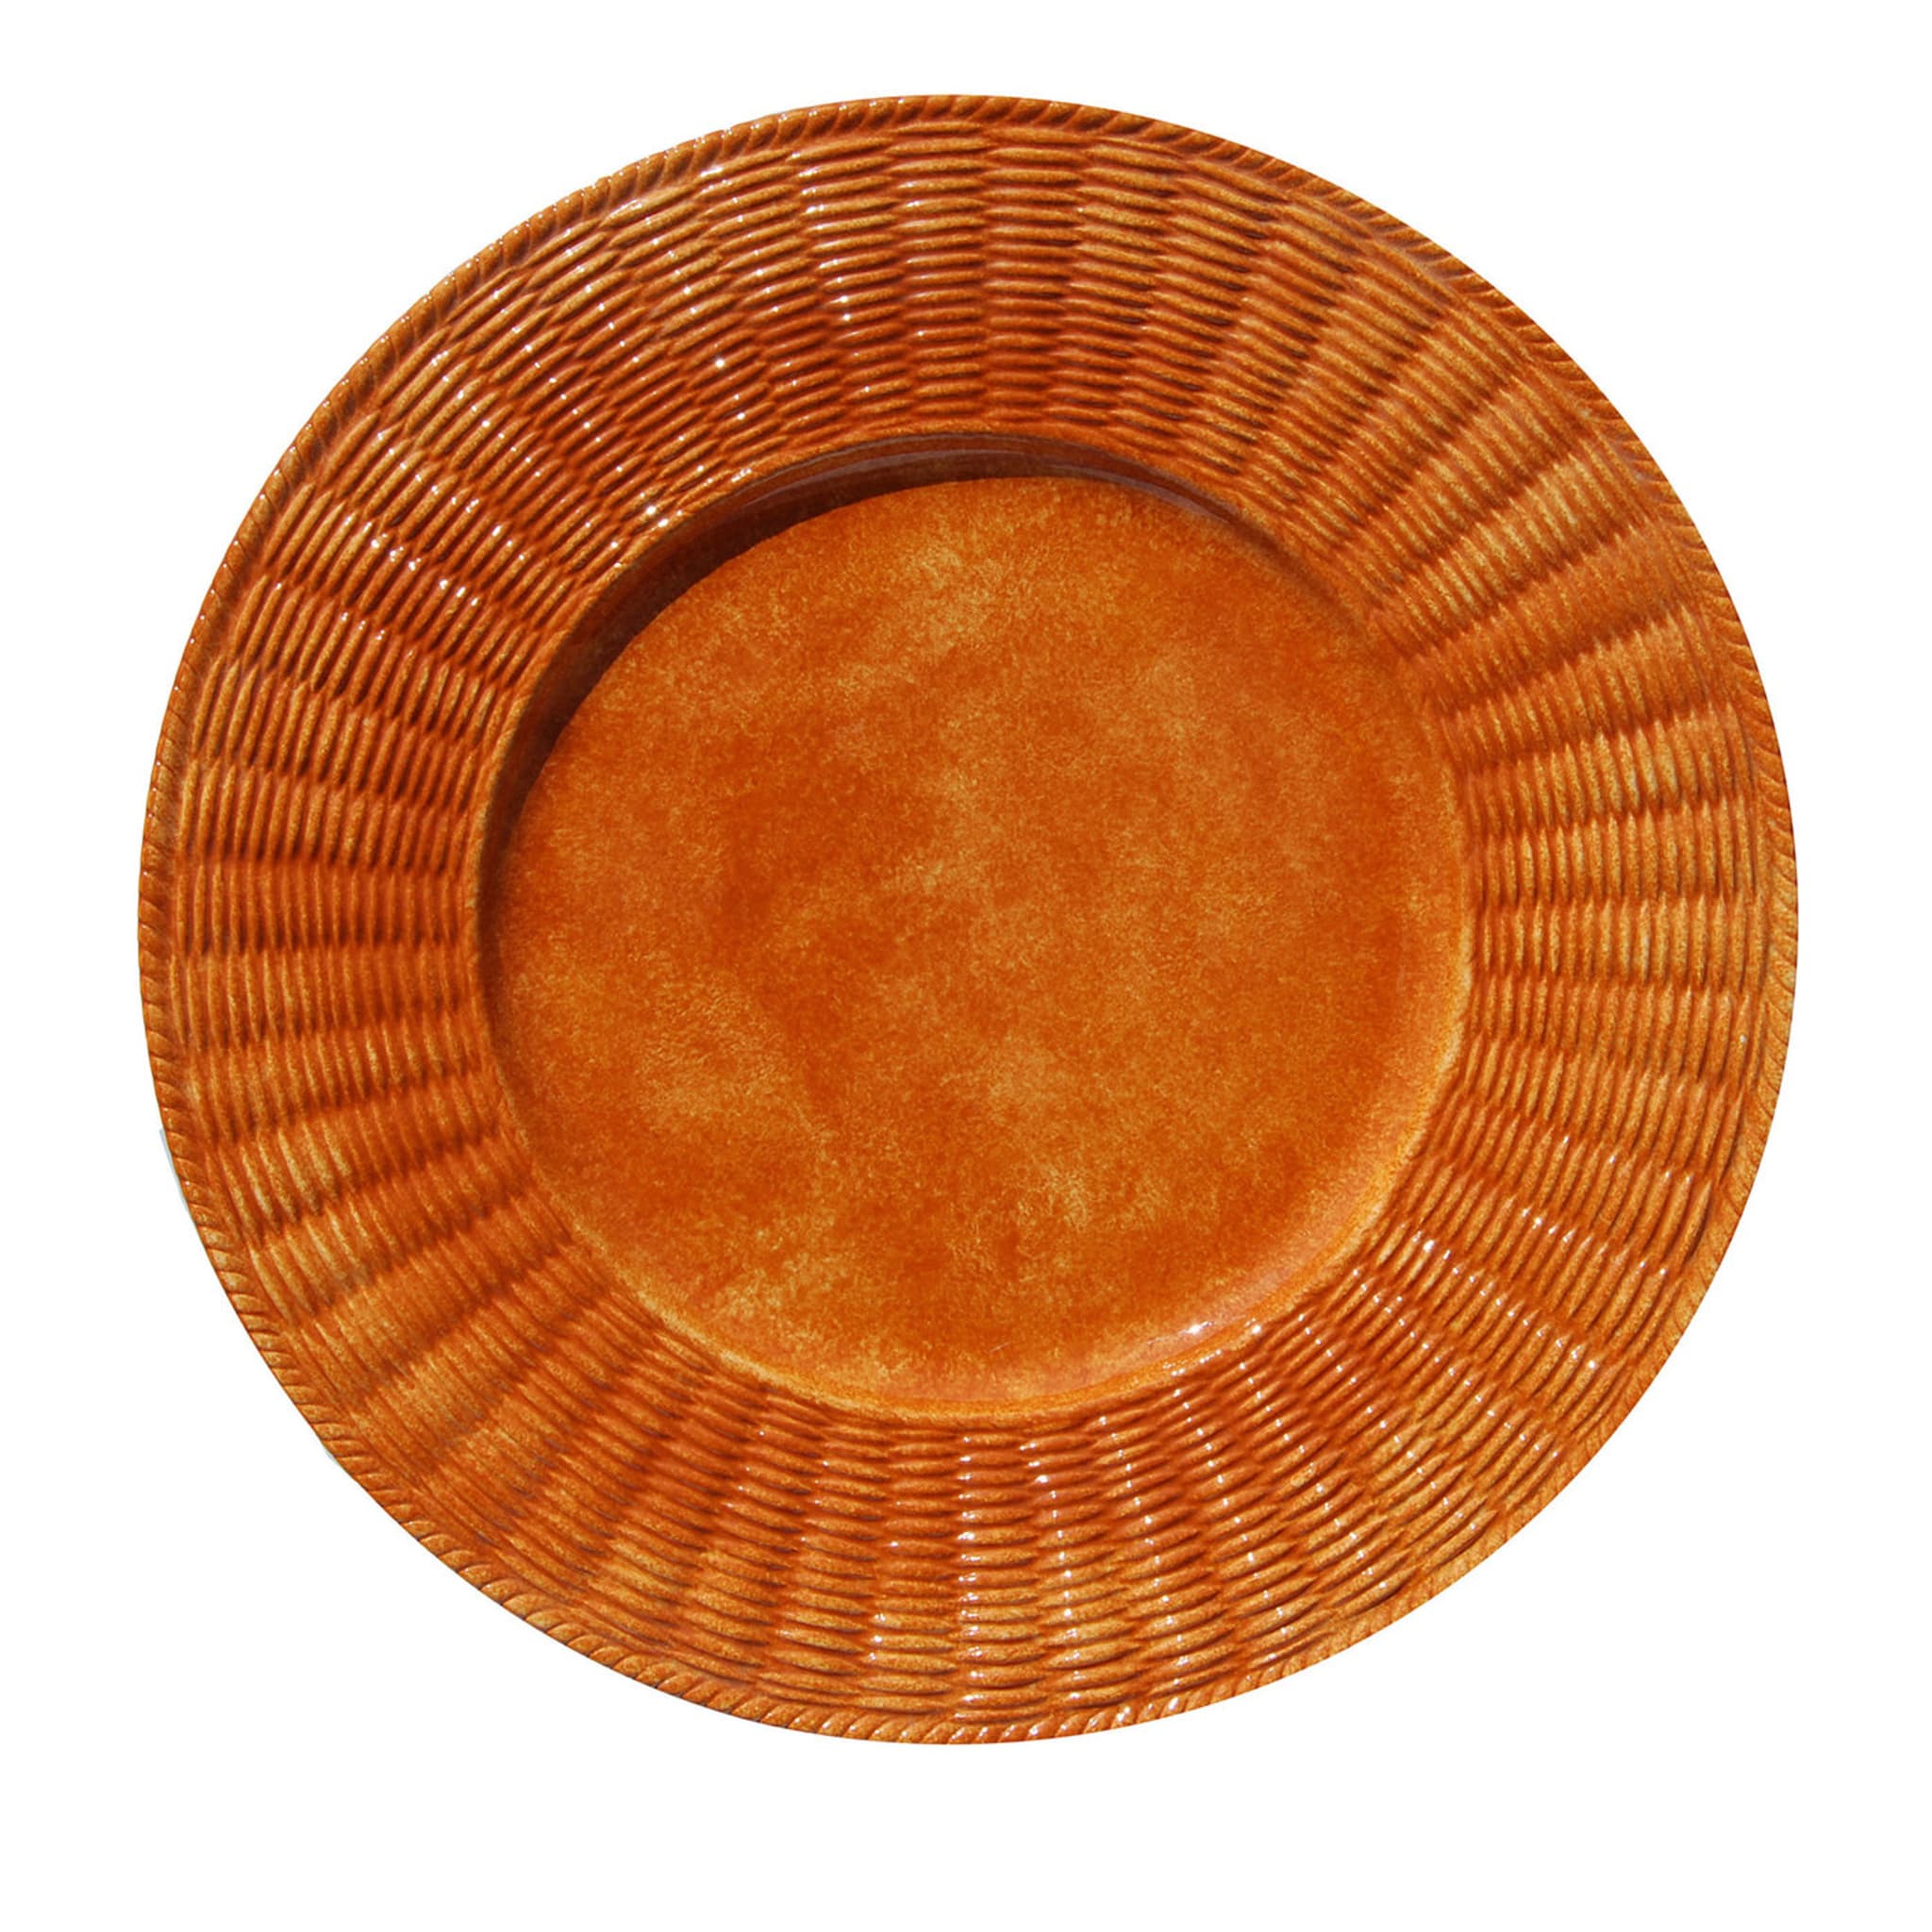 Set of 4 Arancio Wicker Ceramic Plates - Main view